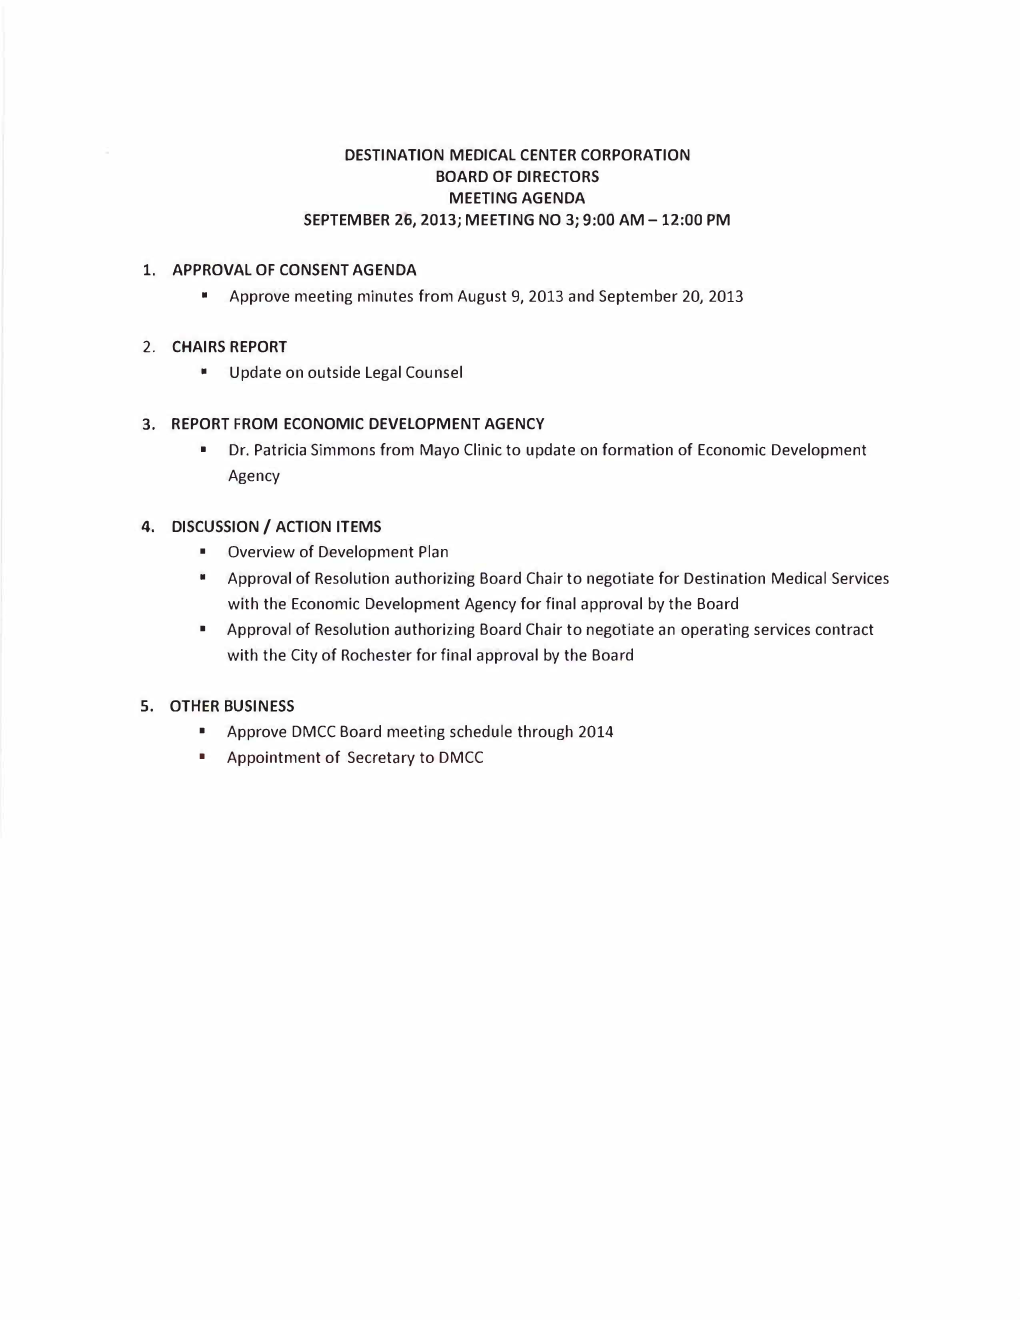 Destination Medical Center Corporation Board of Directors Meeting Agenda